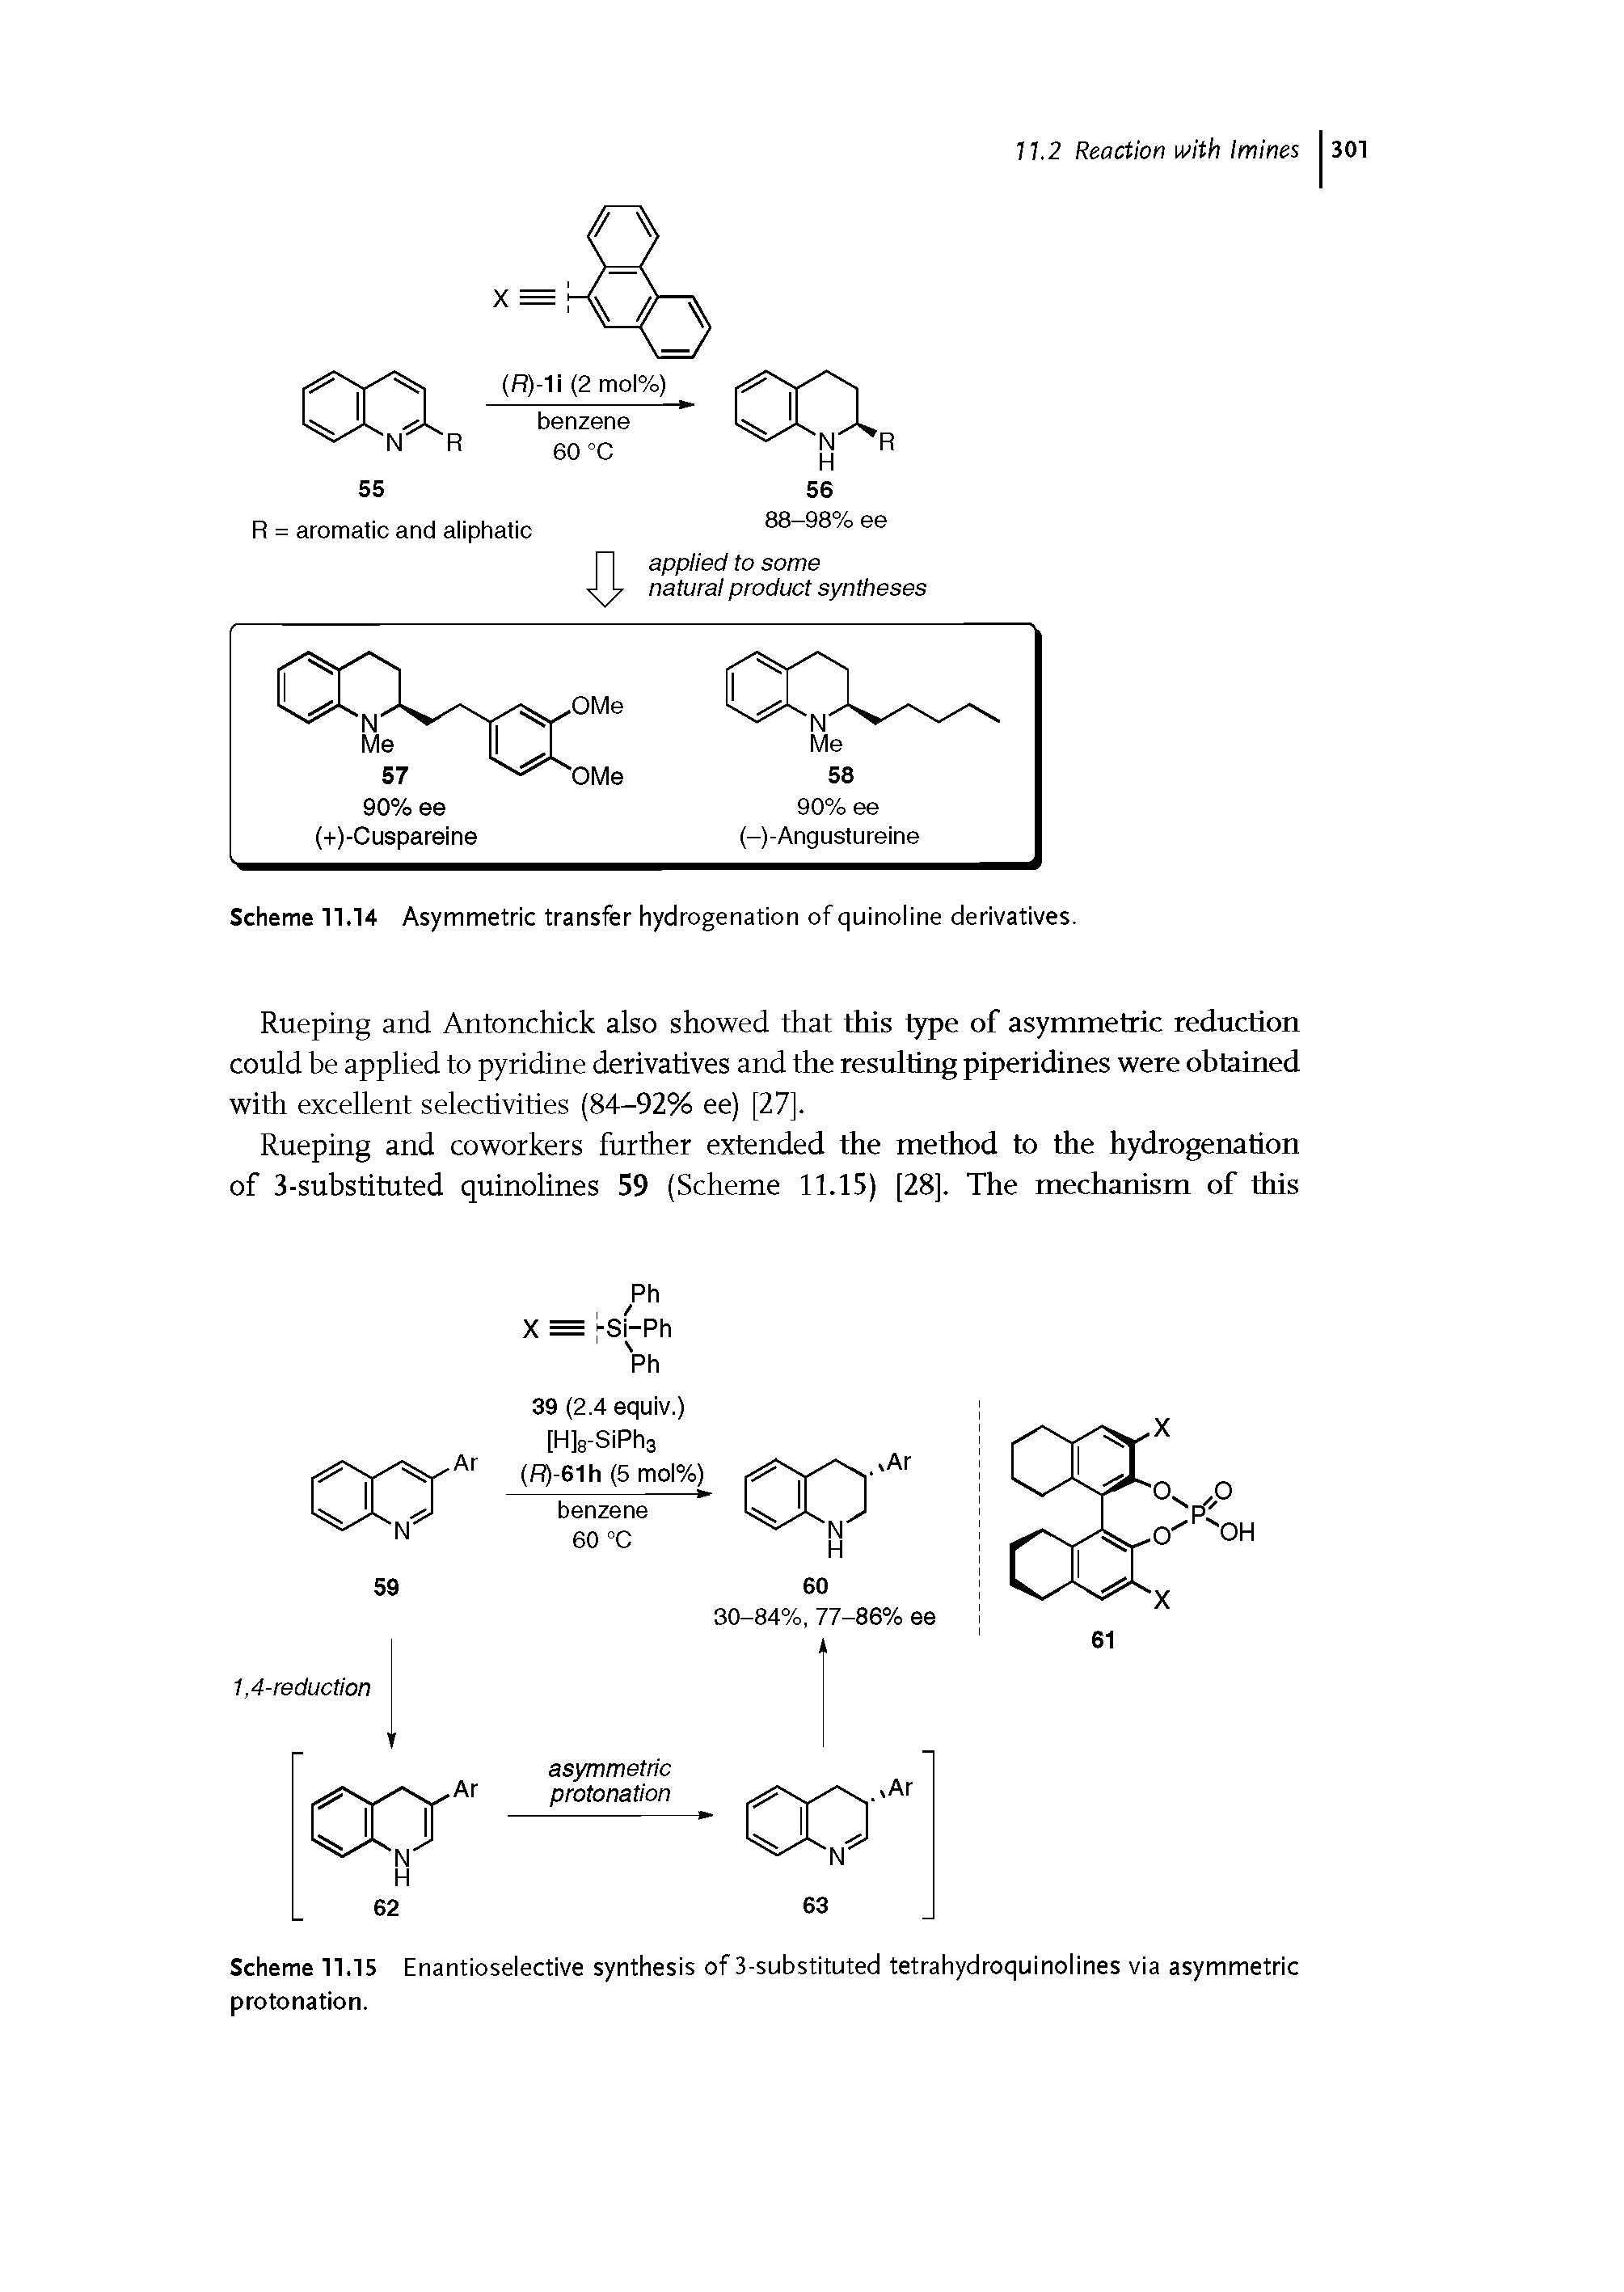 Scheme 11.15 Enantioselective synthesis of 3-substituted tetrahydroquinolines via asymmetric protonation.